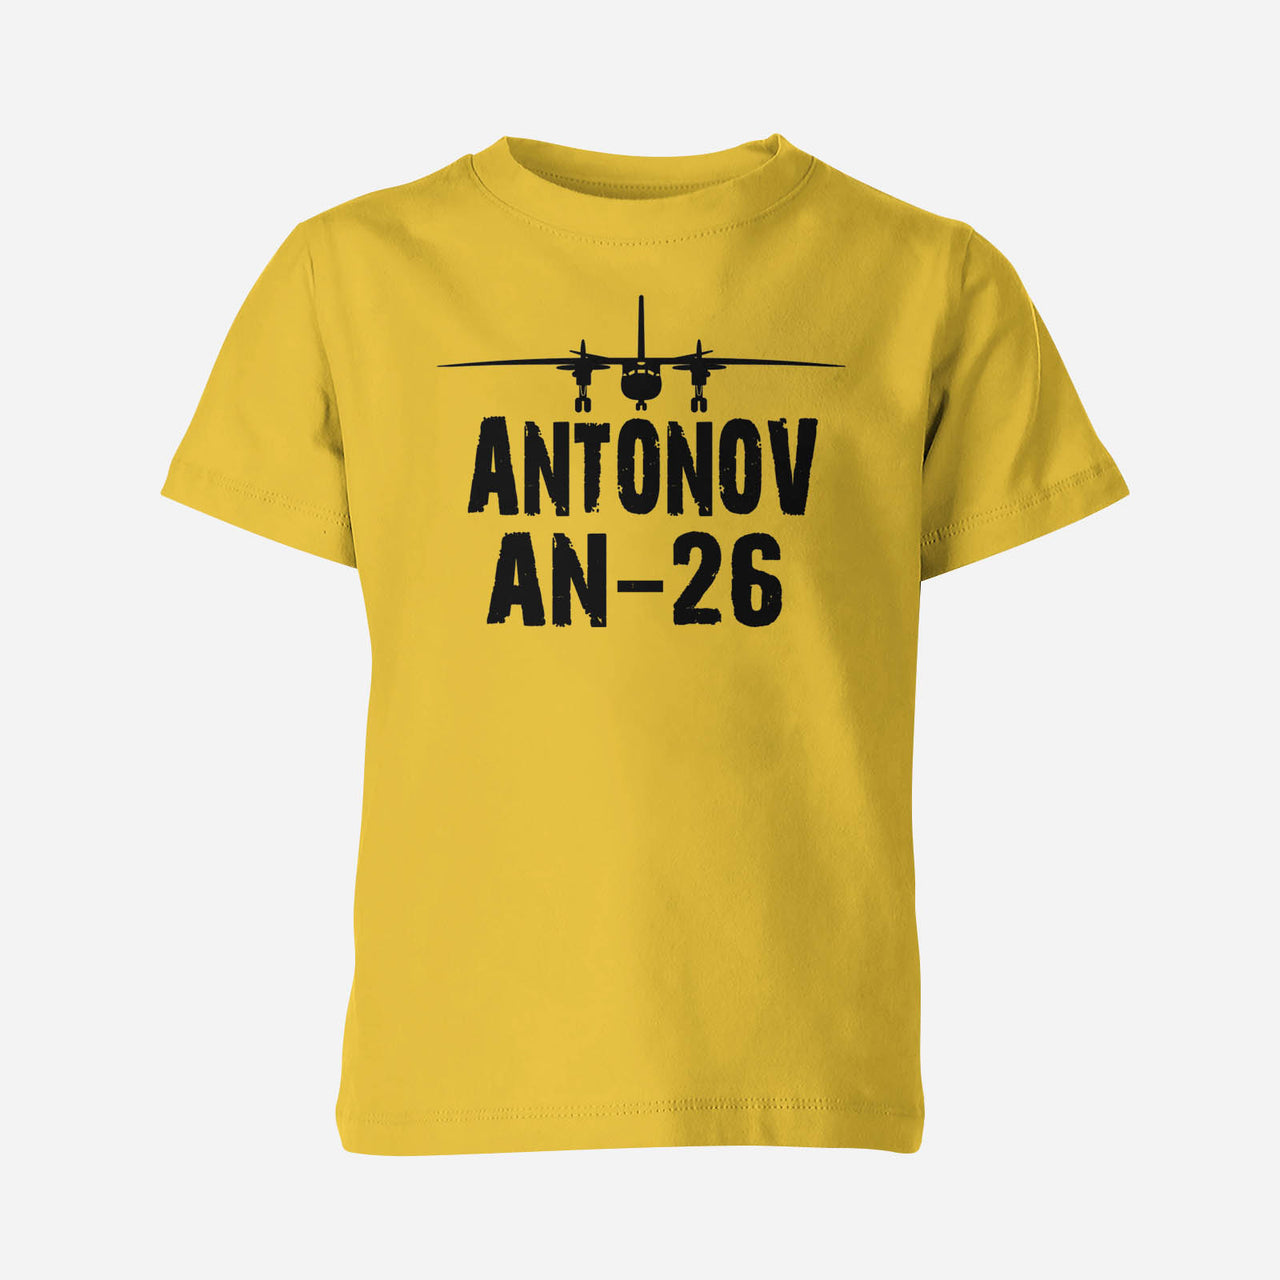 Antonov AN-26 & Plane Designed Children T-Shirts